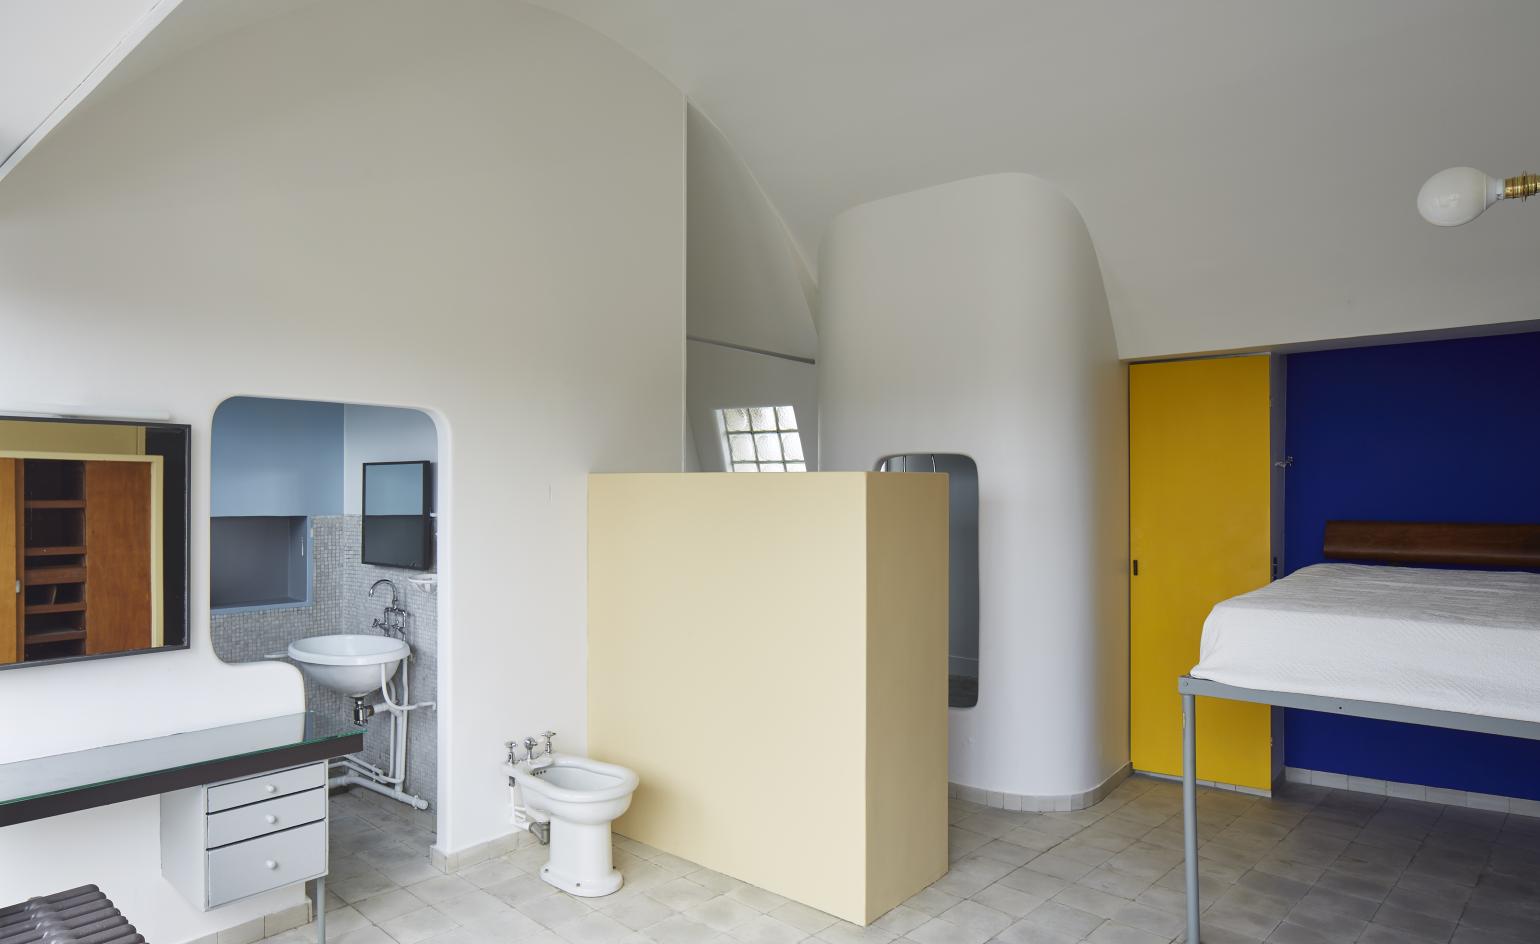 The bathroom inside Le Corbusier's restored Paris apartment.